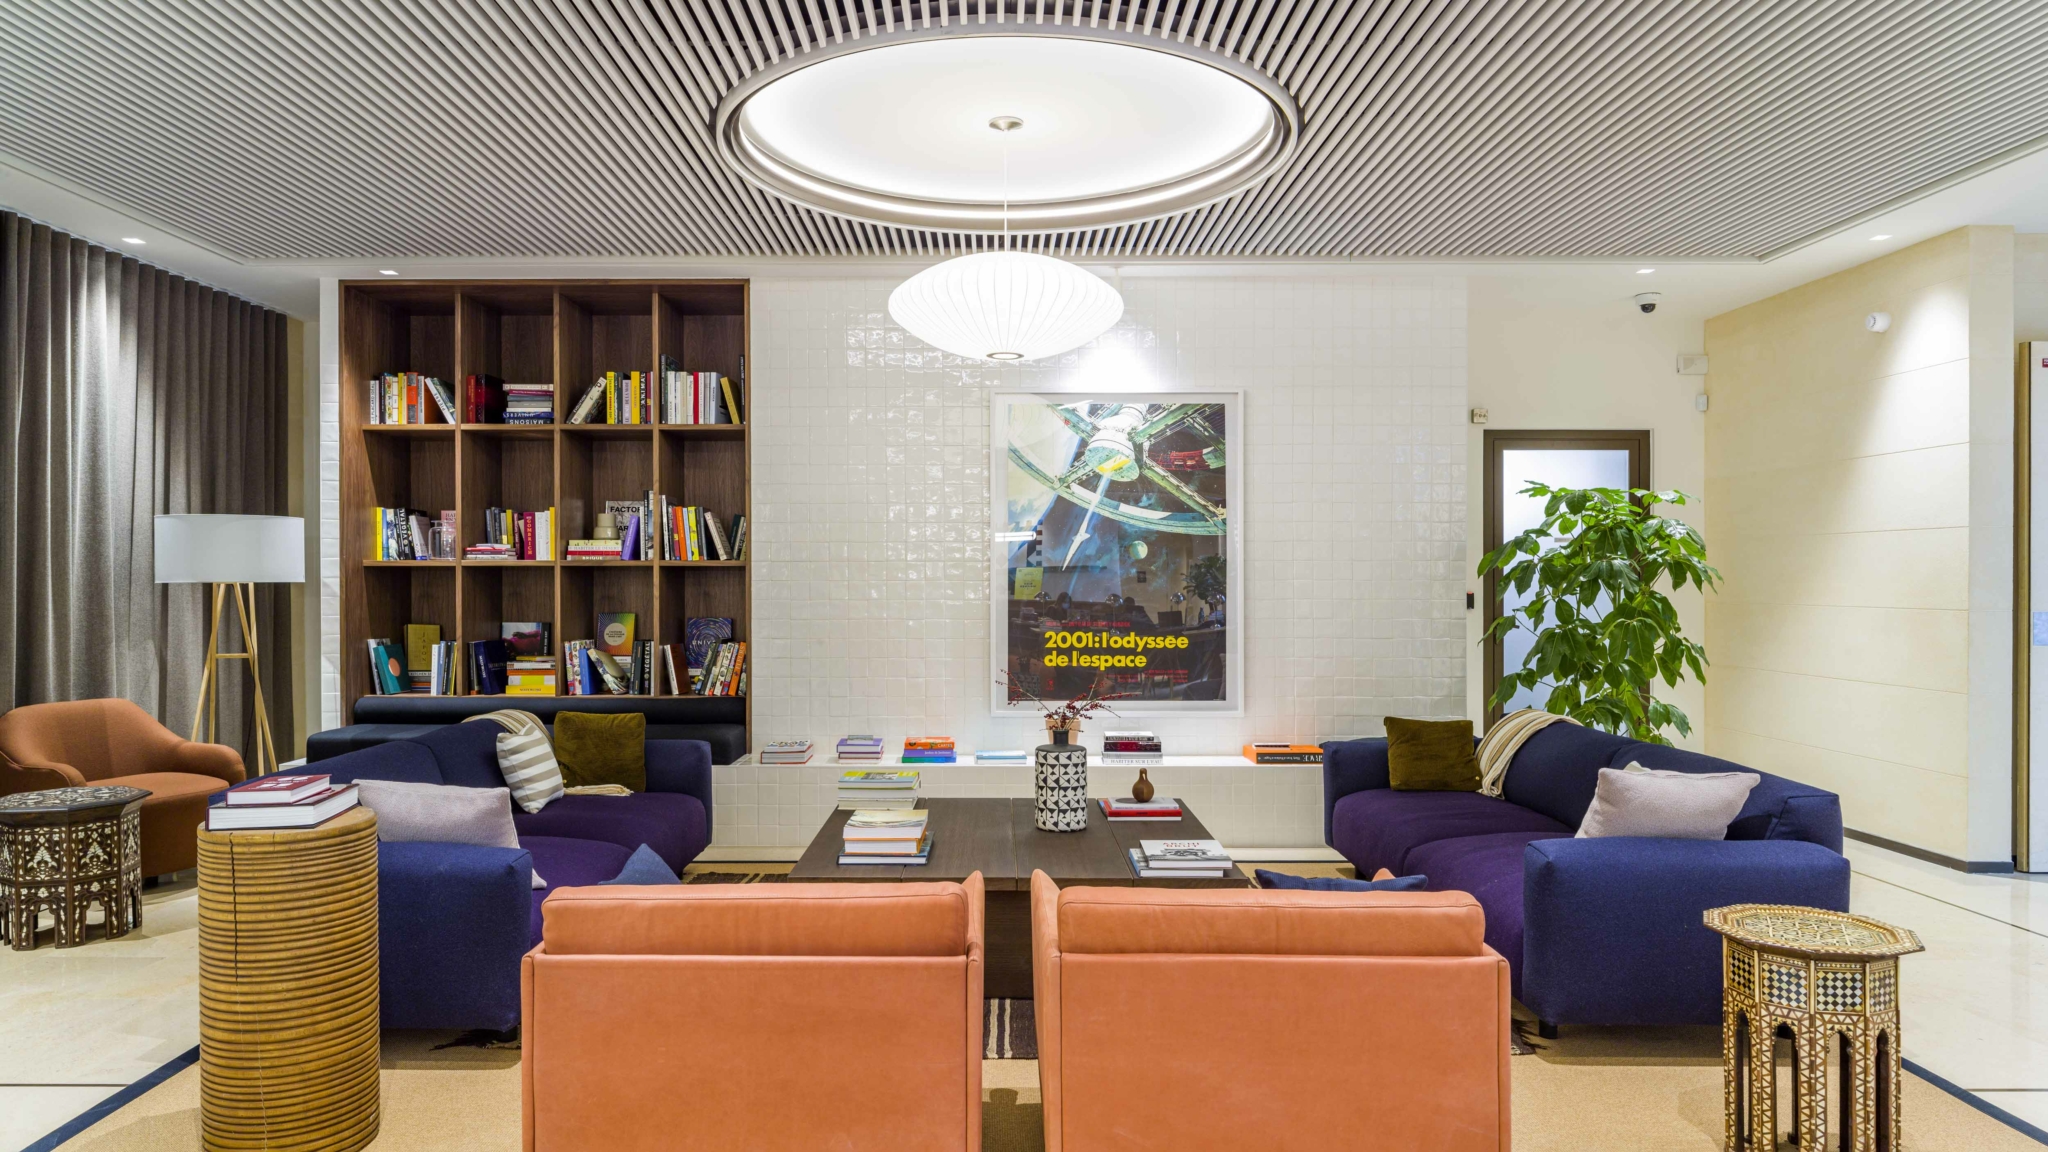 Office Design With Parisian Style - Office Interior Design Ideas